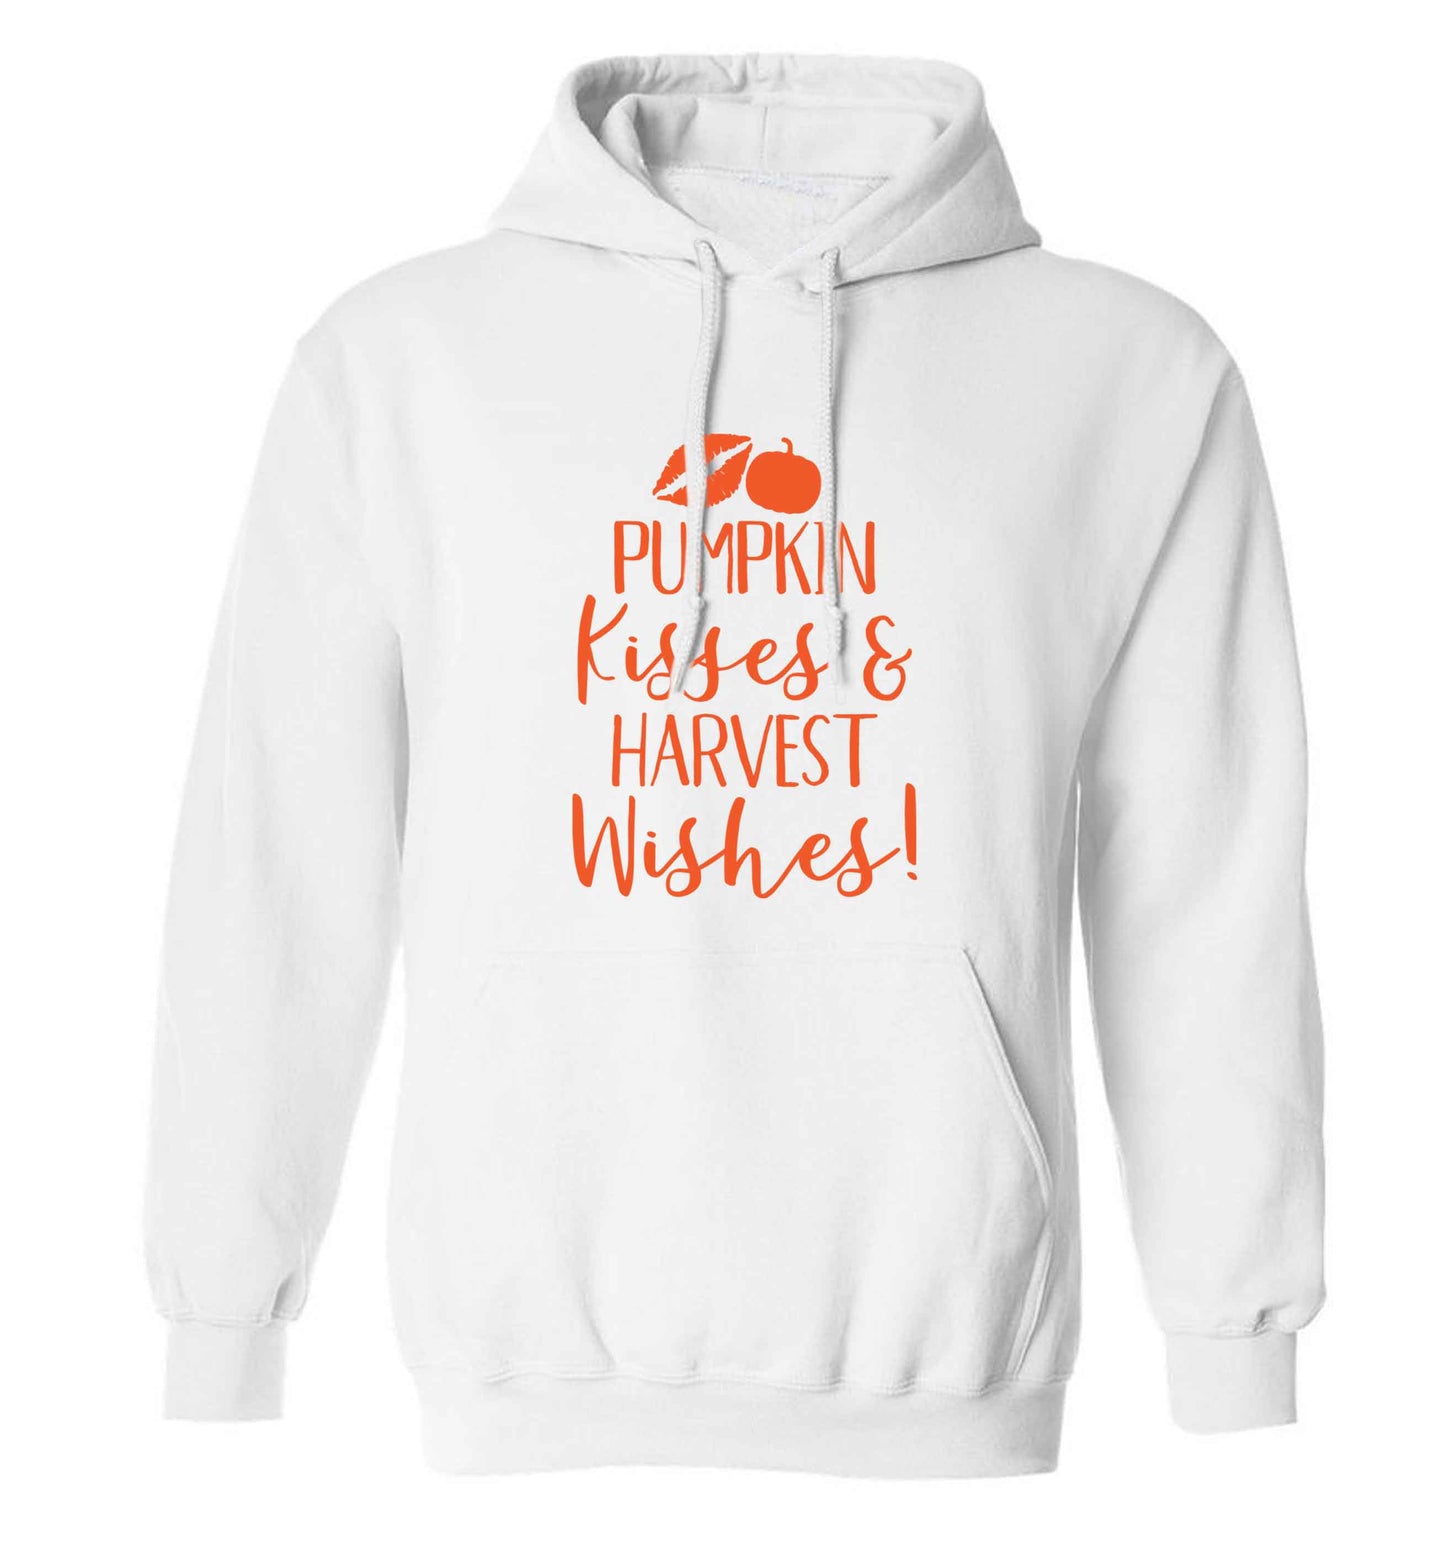 Pumpkin Kisses Harvest adults unisex white hoodie 2XL